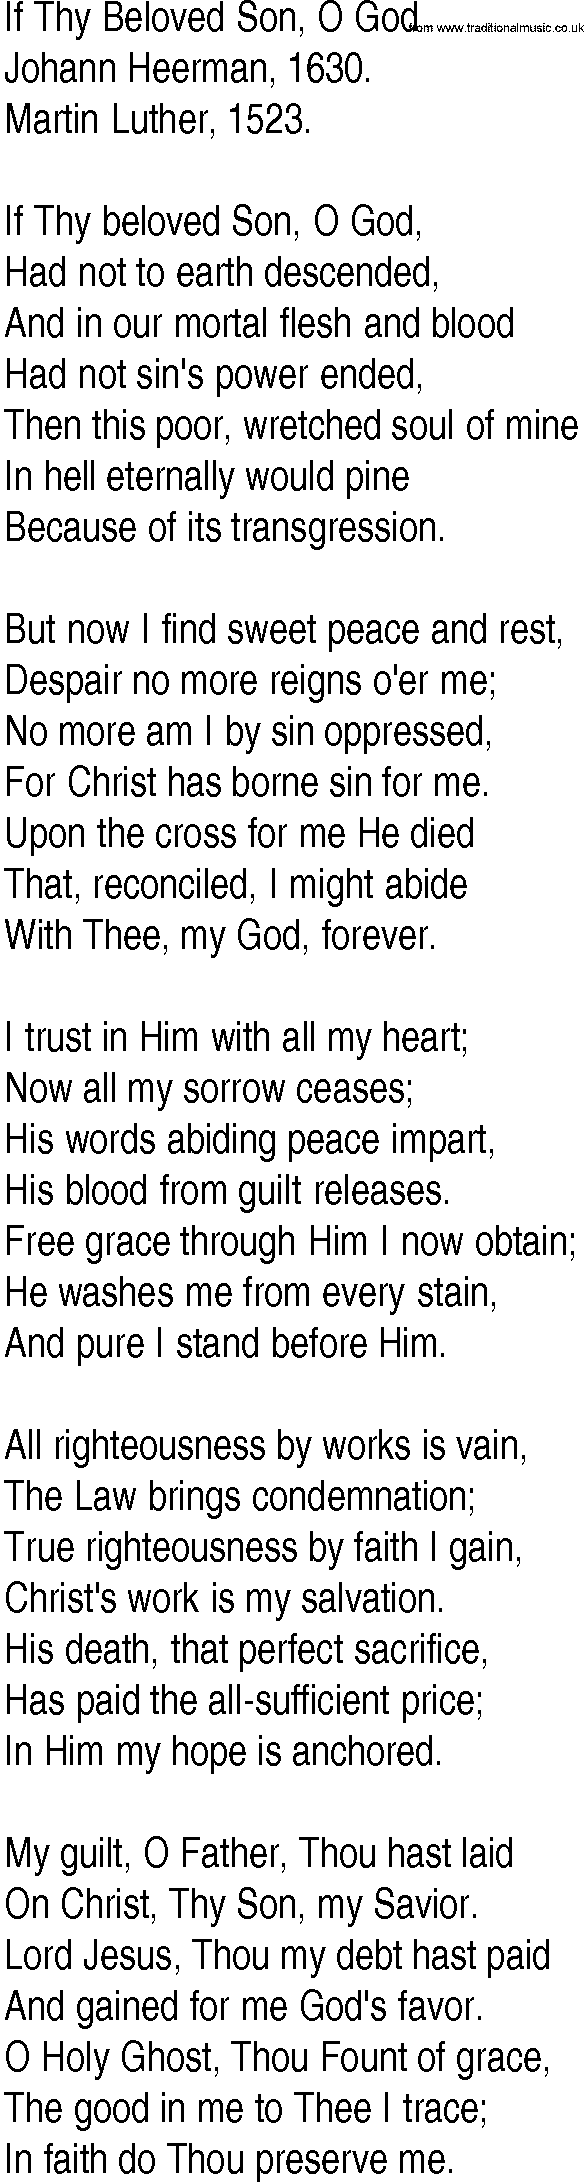 Hymn and Gospel Song: If Thy Beloved Son, O God by Johann Heerman lyrics